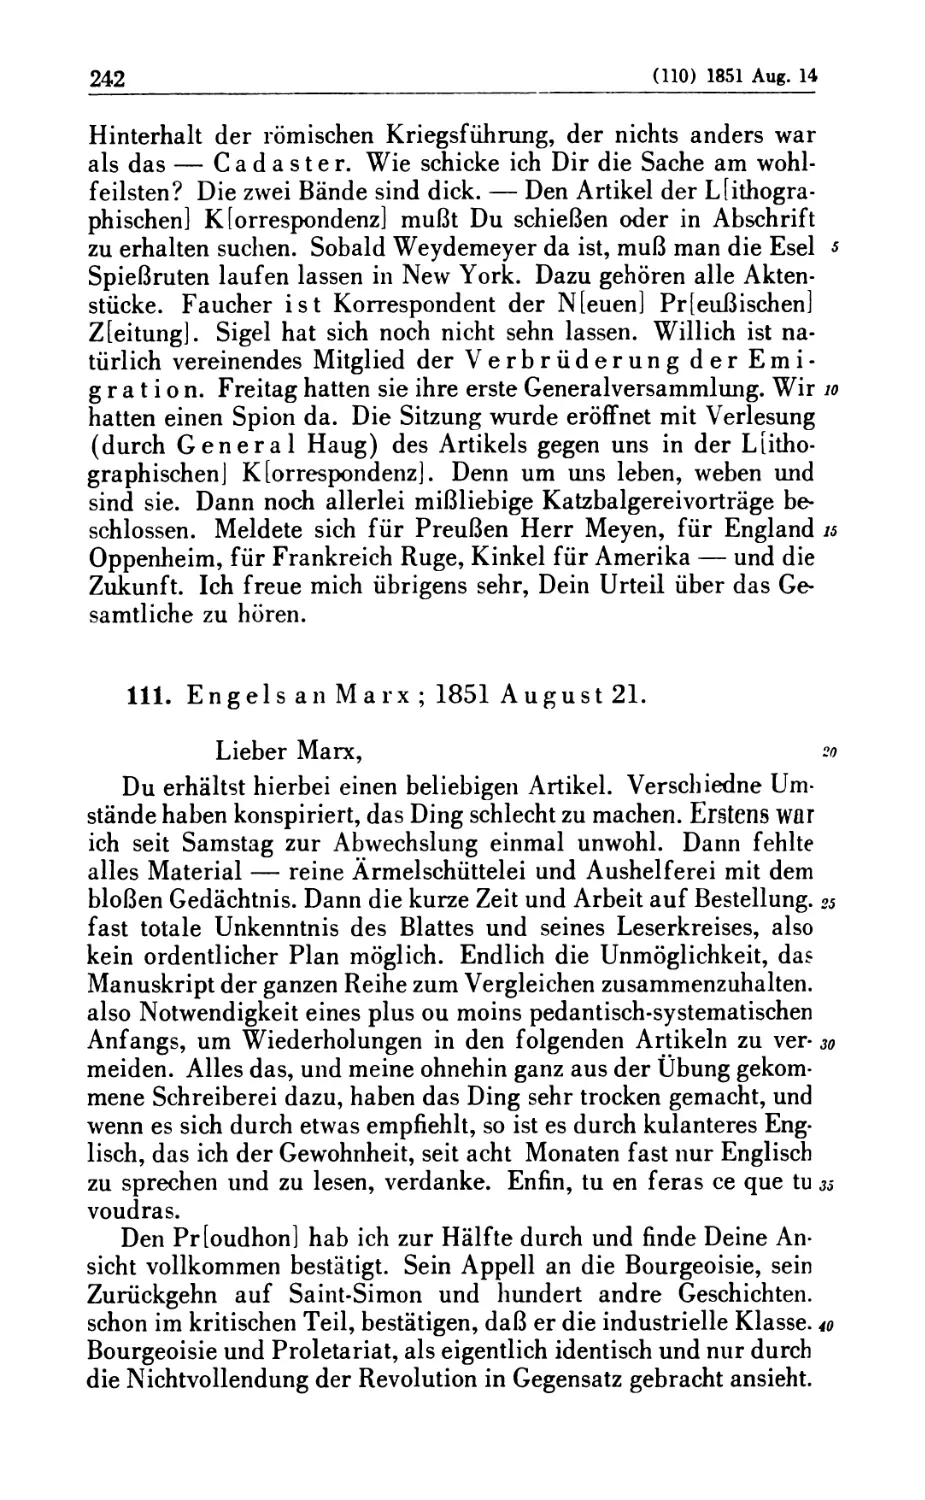 111. Engels an Marx; 1851 August 21